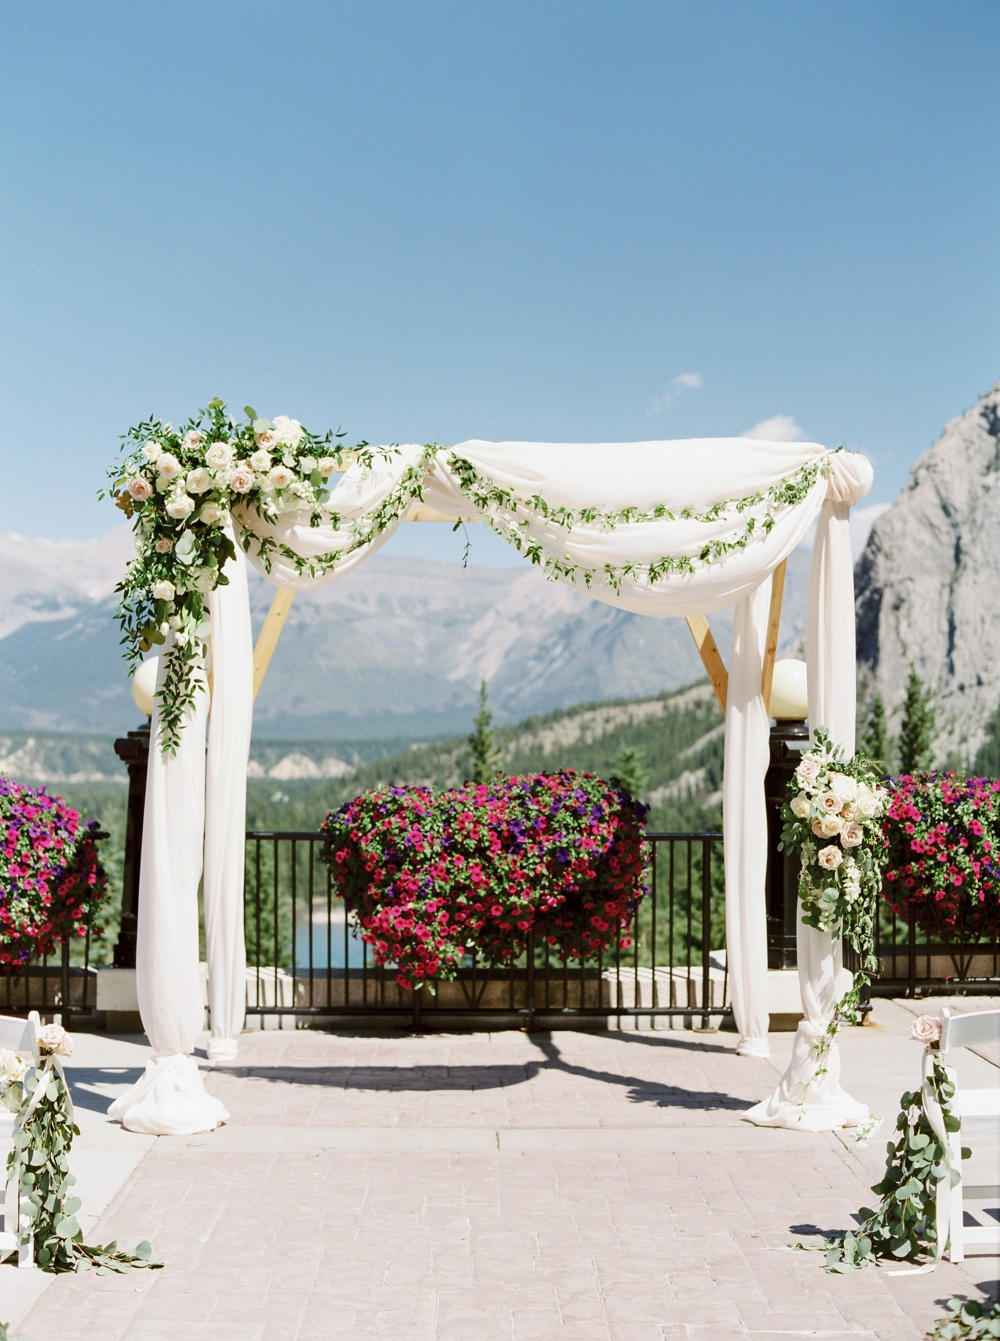 Wedding ceremony floral arch way decor at the Fairmont Banff Springs Hotel | Banff Rocky Mountain Wedding Photographers | Justine Milton fine art film photography